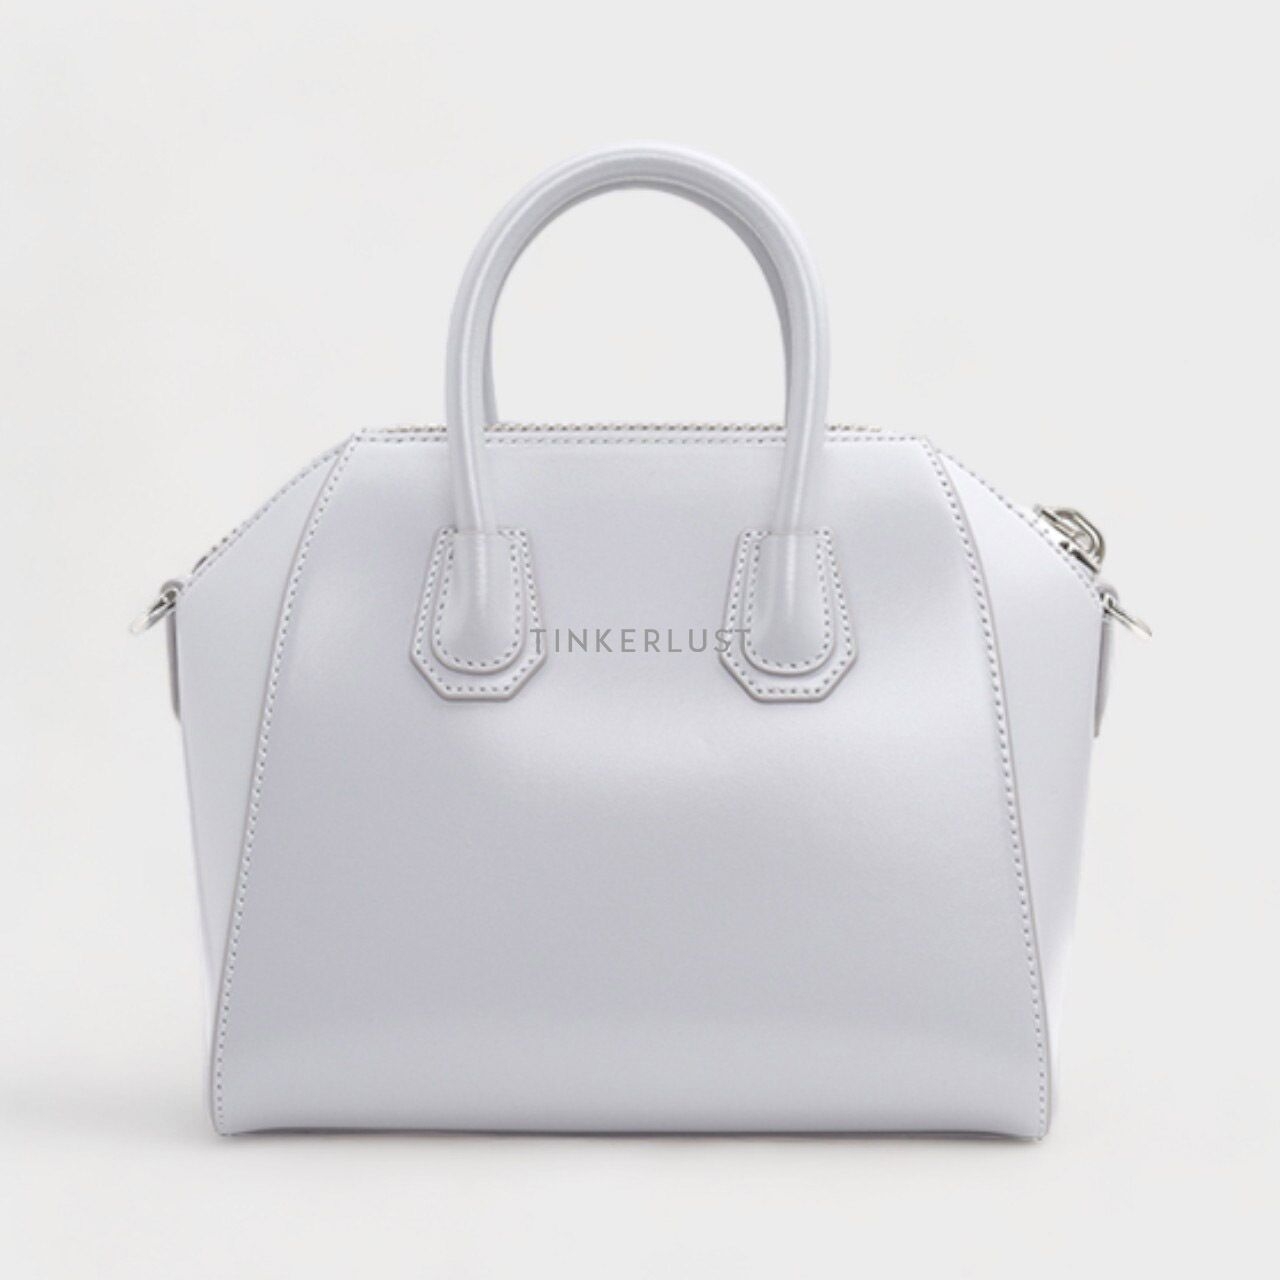 Givenchy Mini Antigona Bag in Light Grey Smooth Box Calfskin Leather Satchel